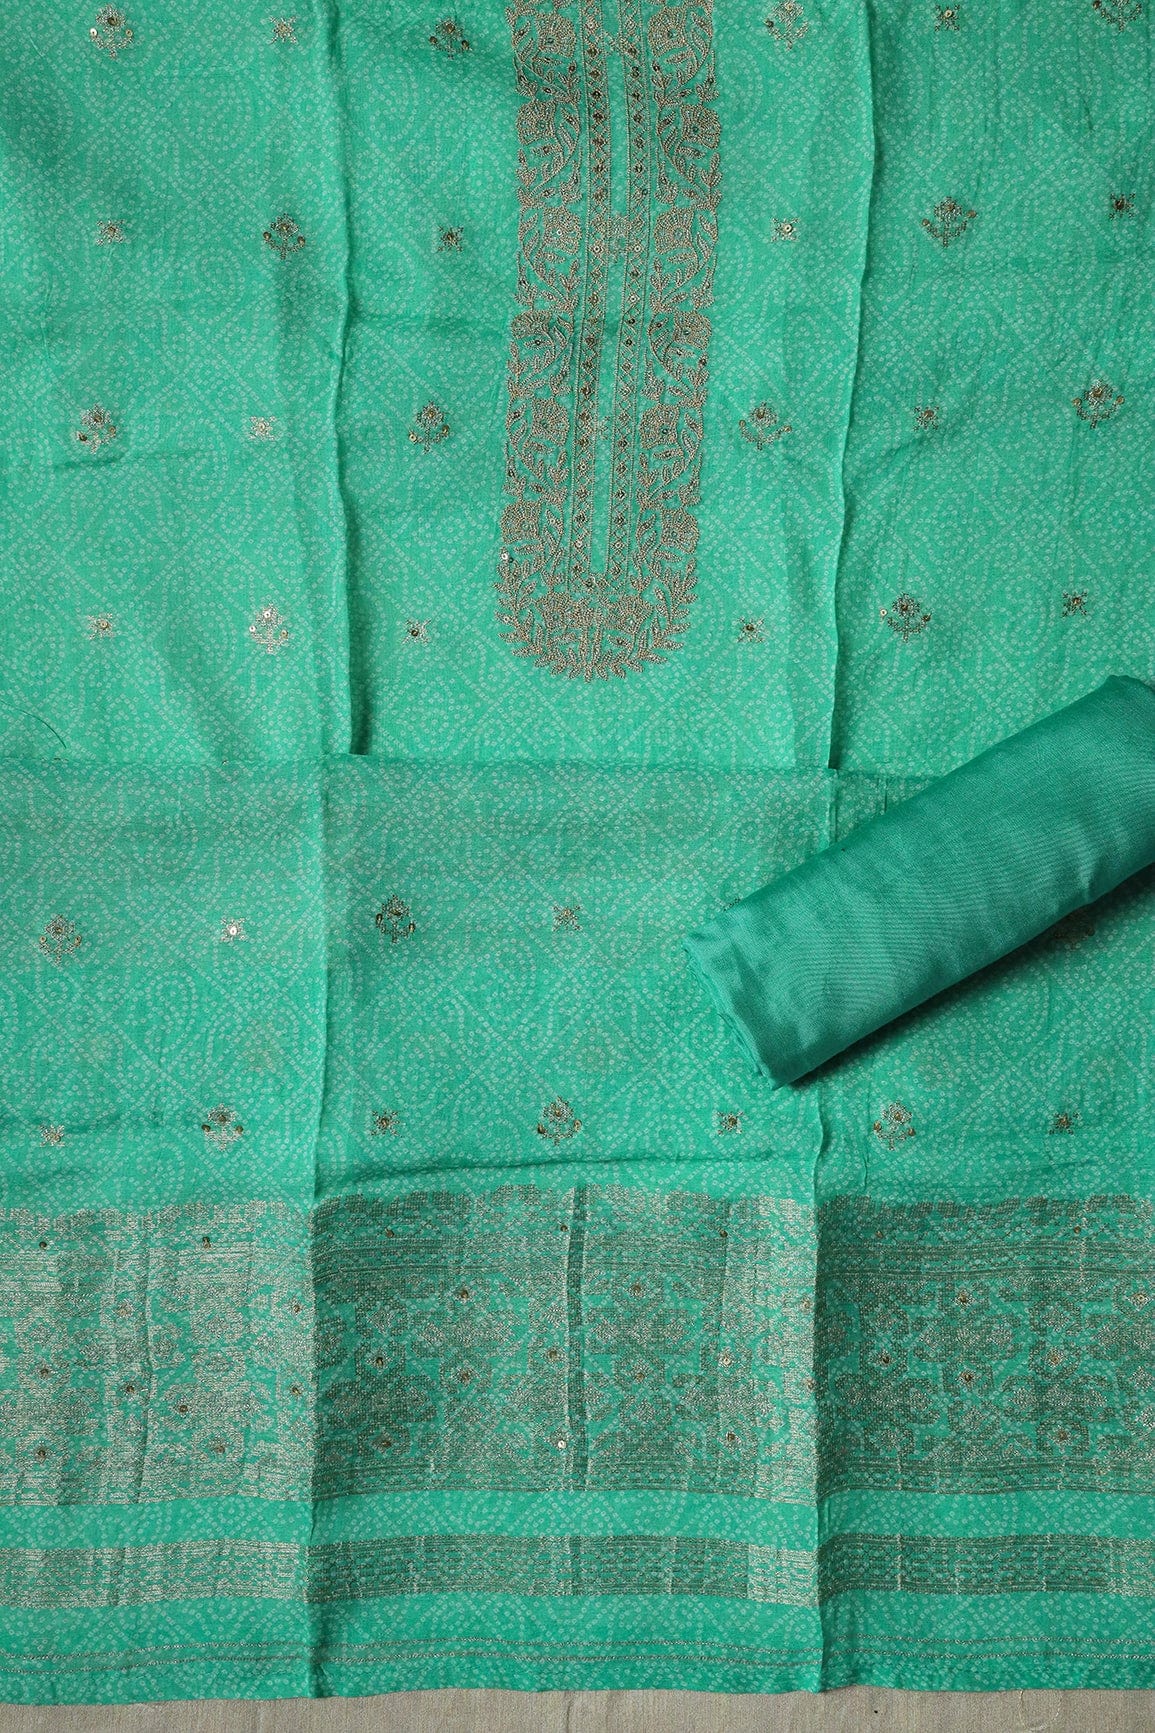 doeraa Semi Stitched Mint Green Semi Stitched Pure Linen Jacquard Suit Set (3 piece)